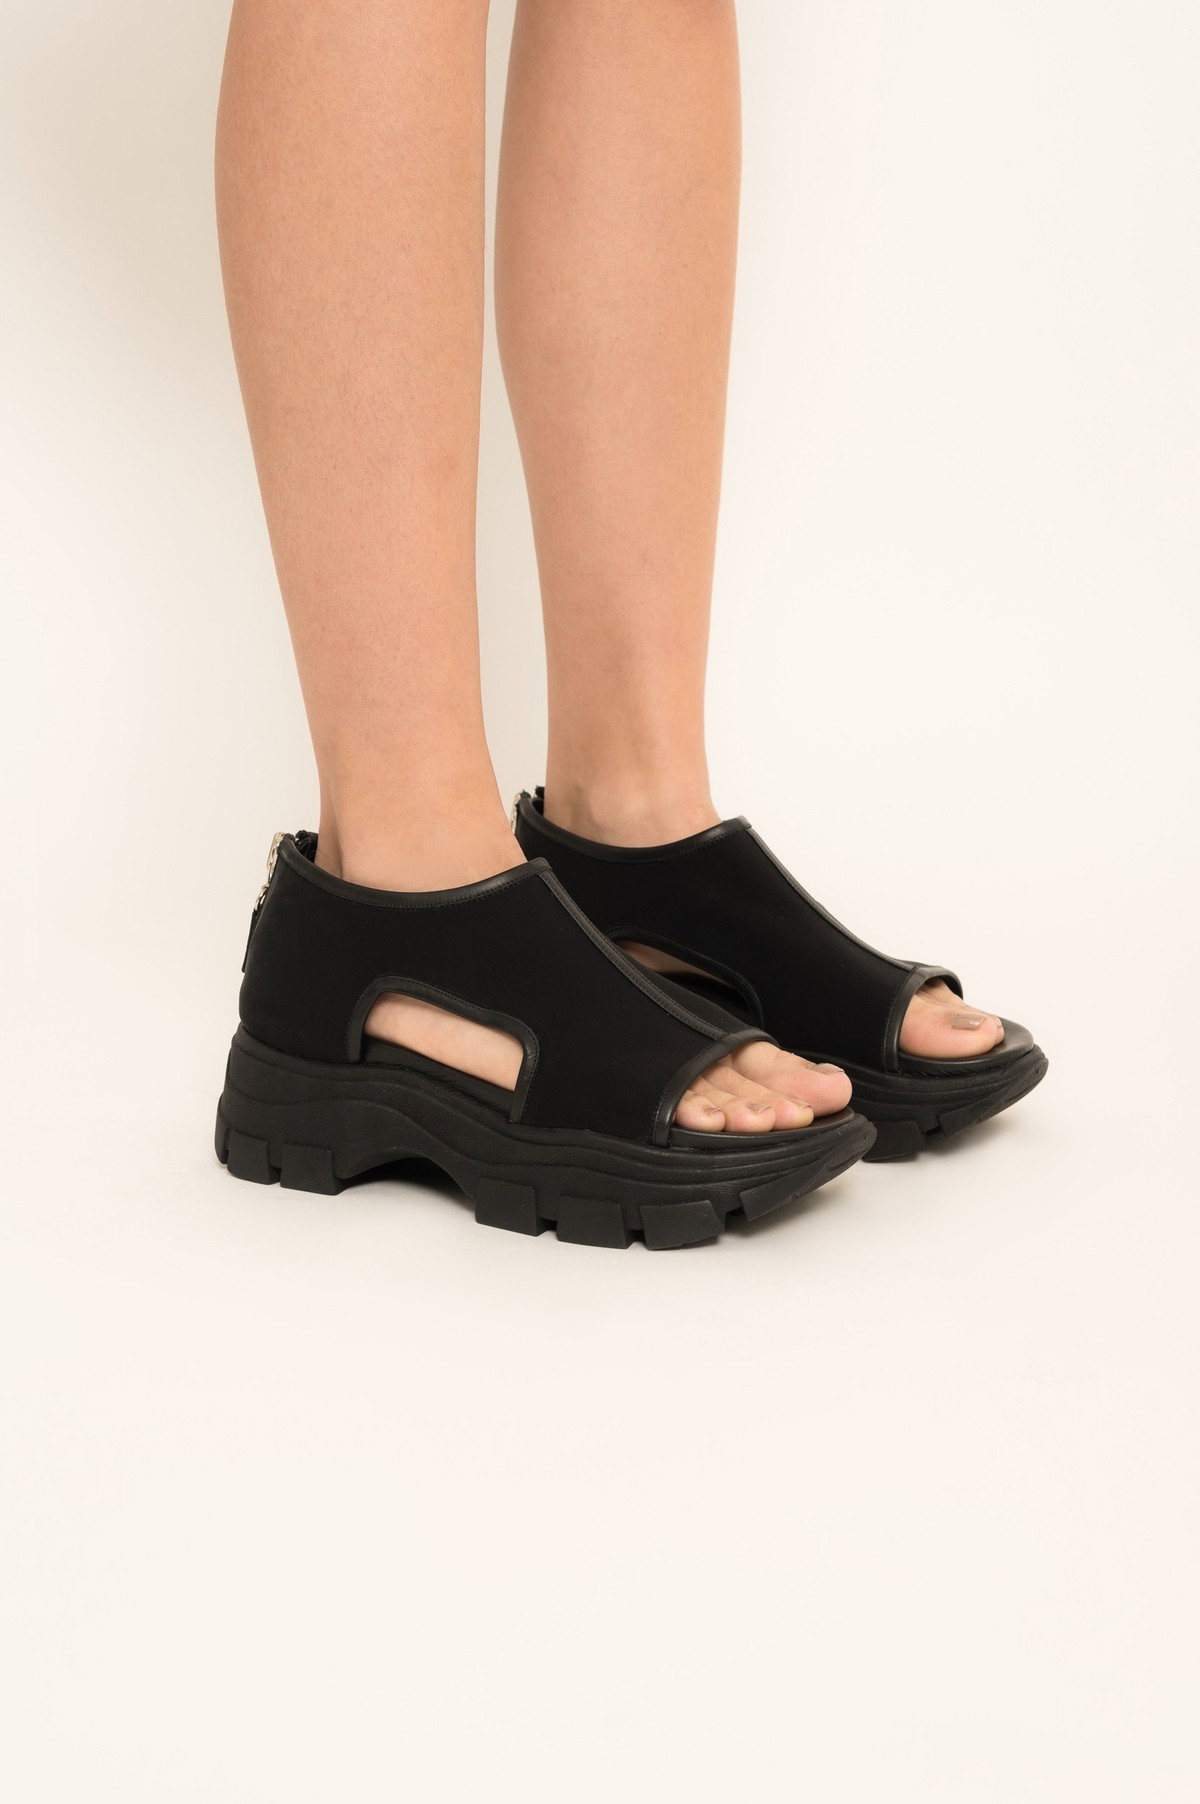 sandália com plataforma robusta em neoprene | neoprene robust sandals